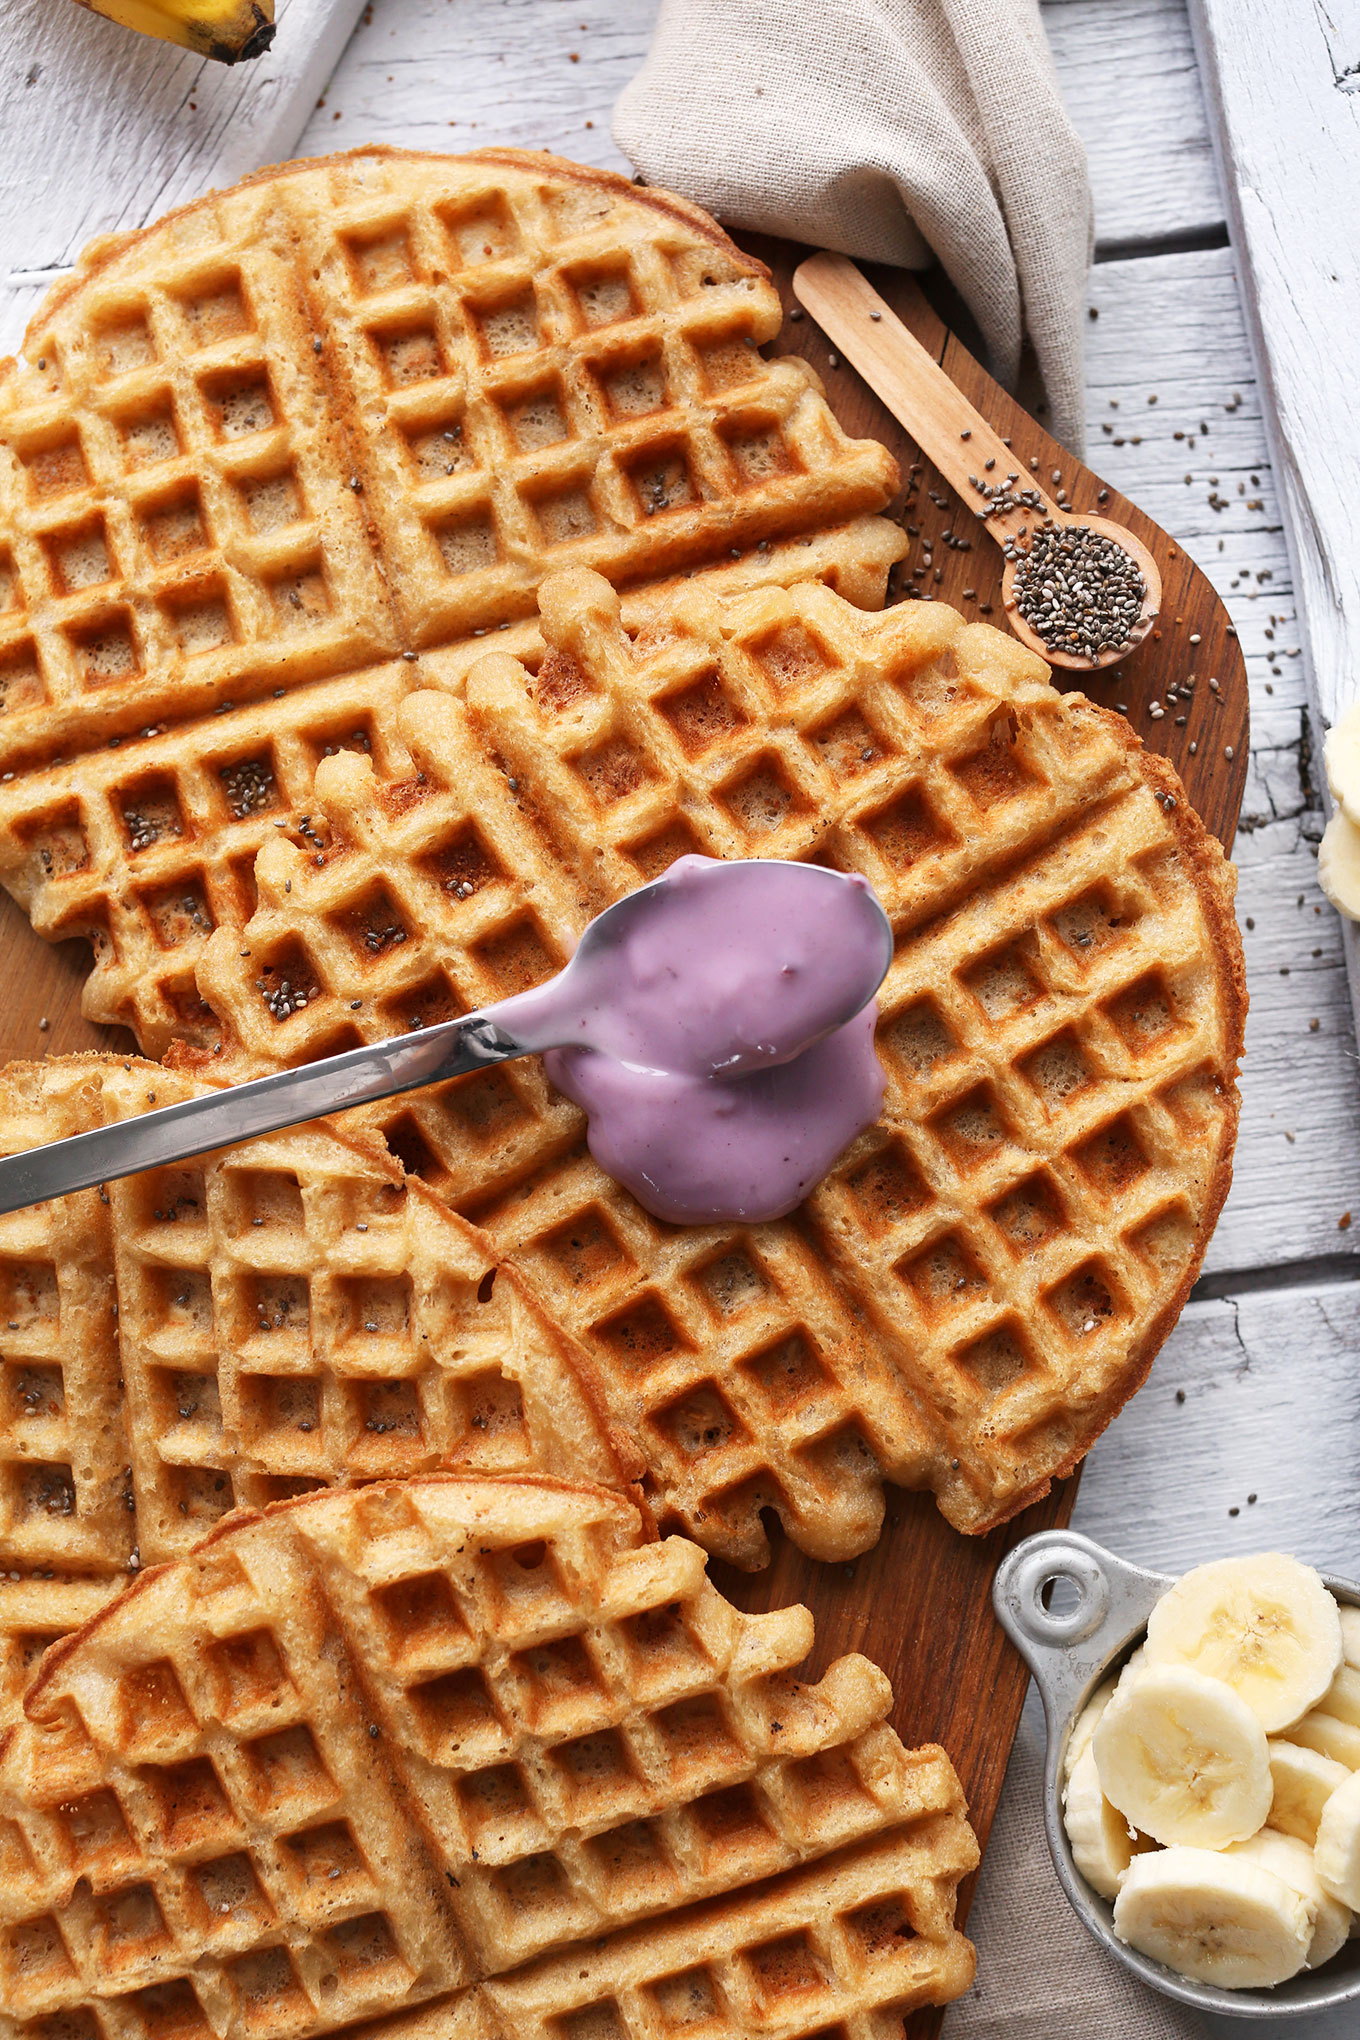 Pouring a spoonful of blueberry yogurt onto homemade gluten-free vegan waffles